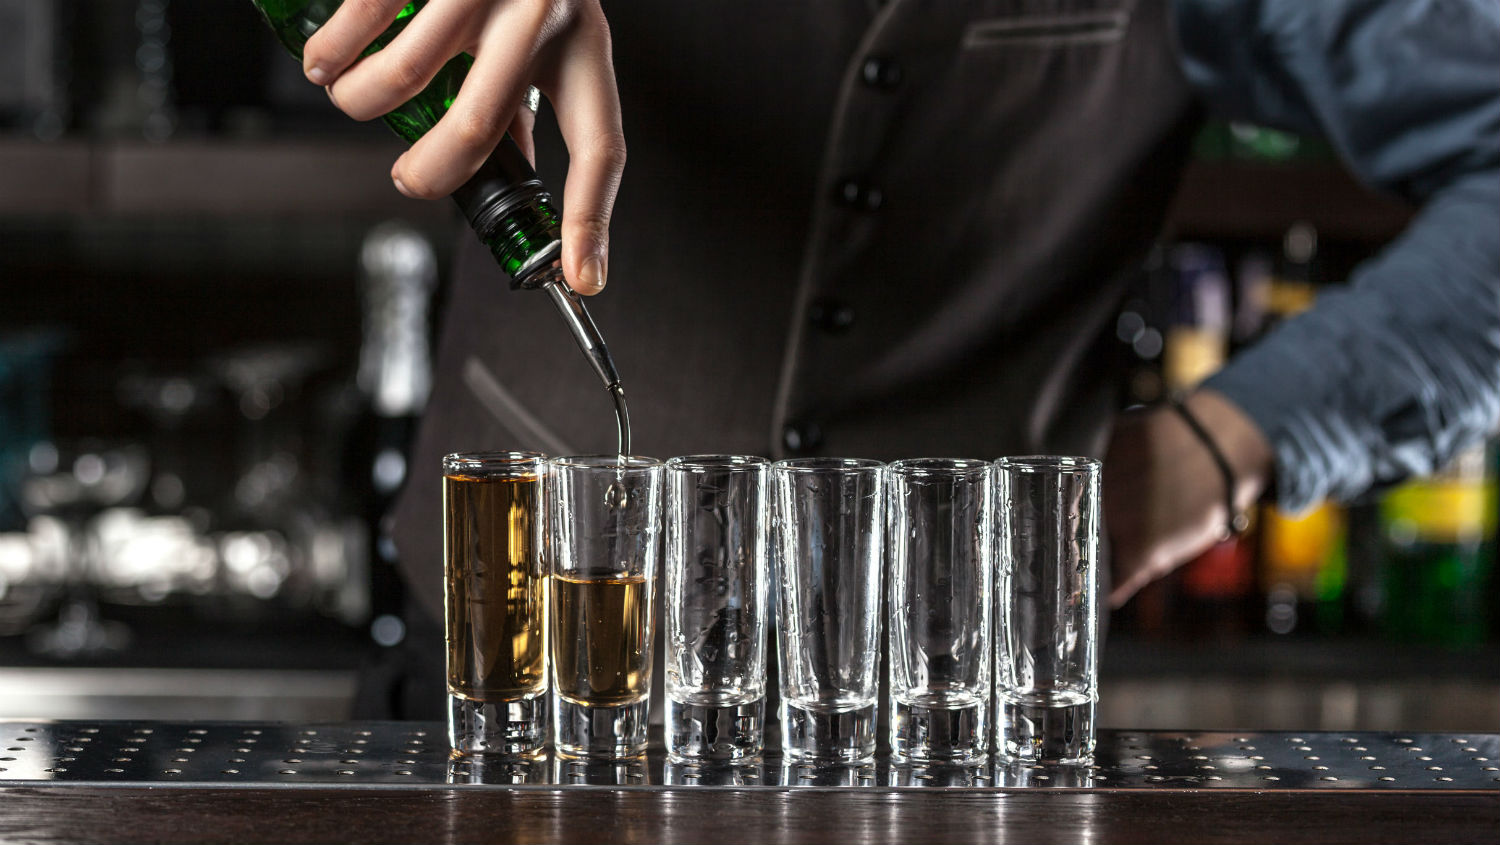 Stainless Steel Bar Pub Jigger Cocktail Whiskey Drink Measuring